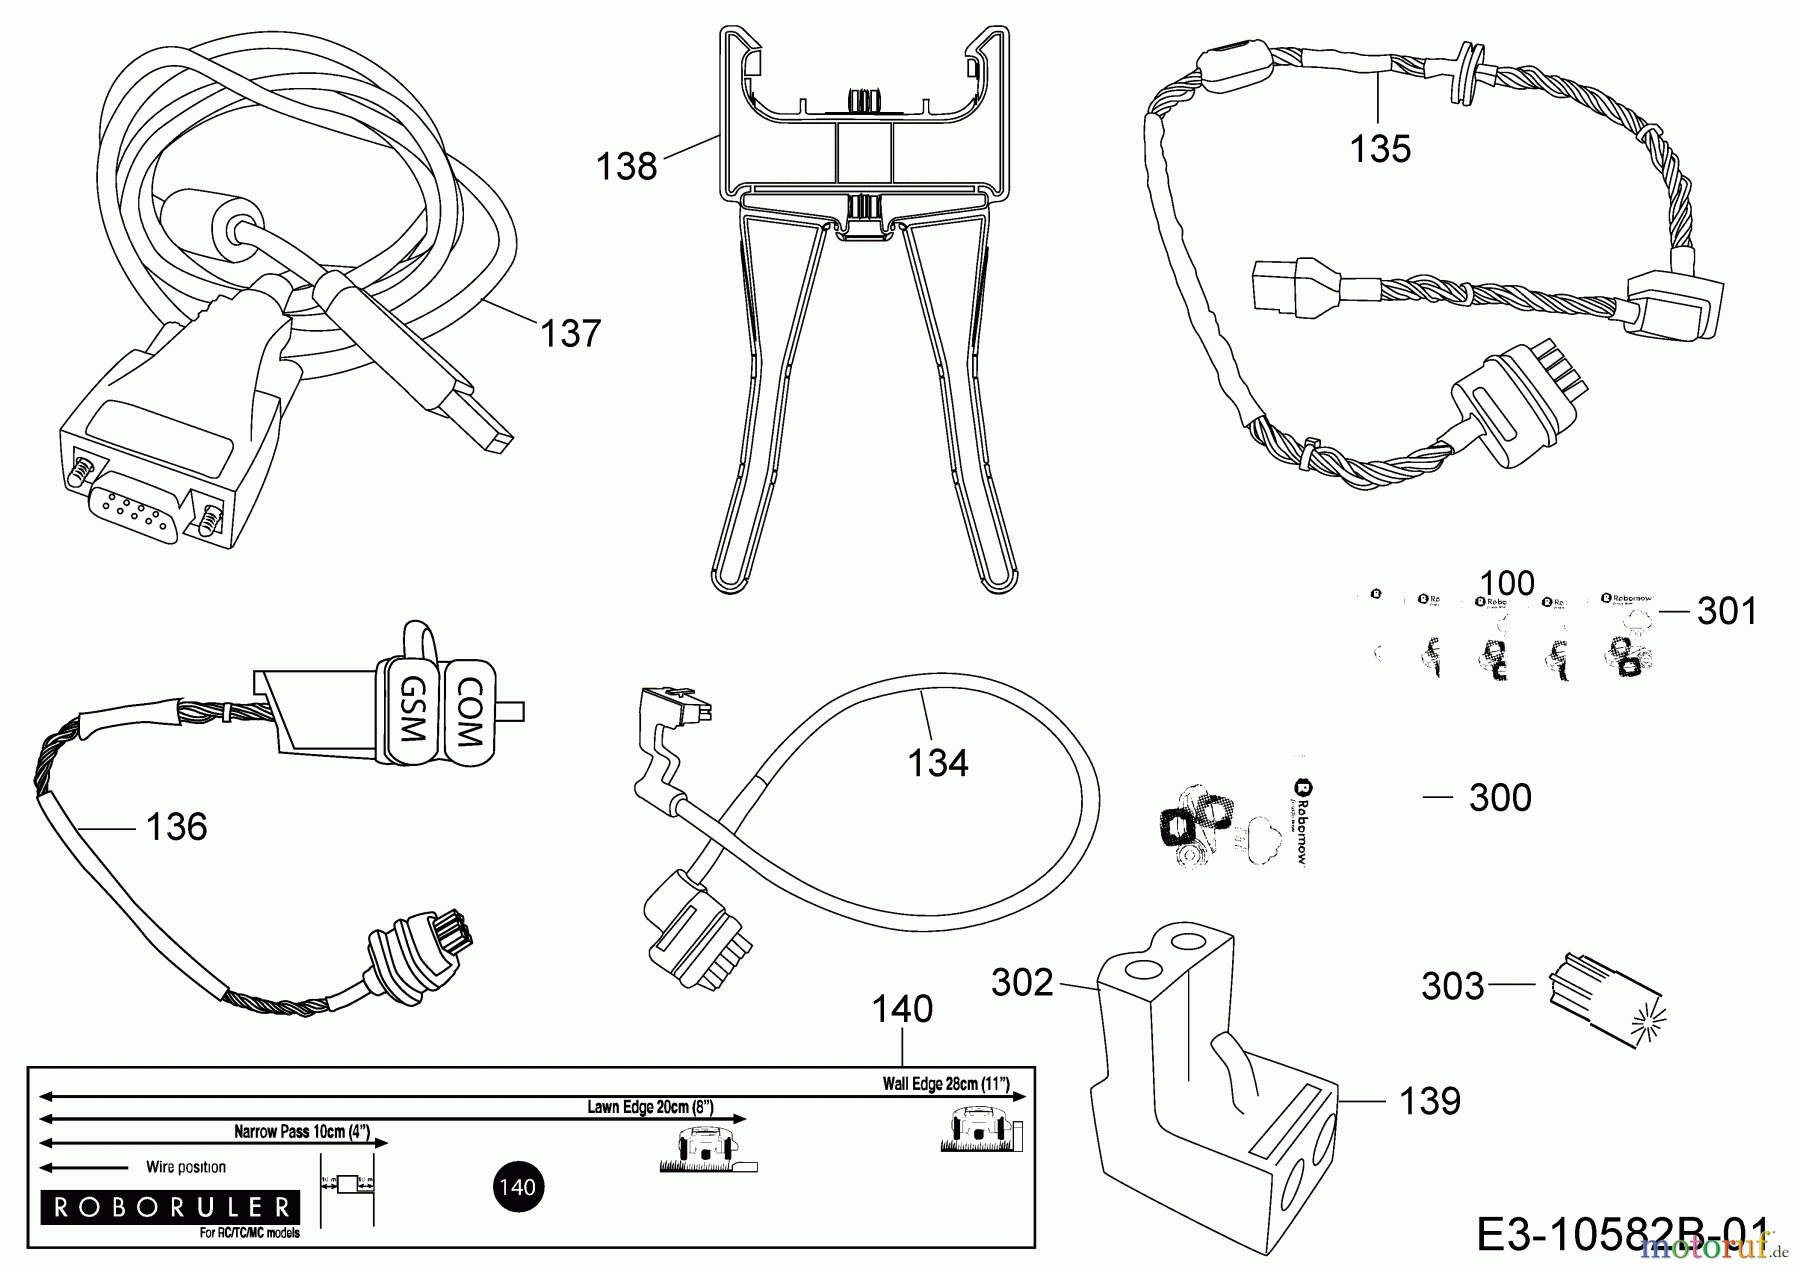  Robomow Mähroboter RC312 PRO S (Black) PRD7012B1  (2017) Kabel, Kabelanschluß, Regensensor, Werkzeug